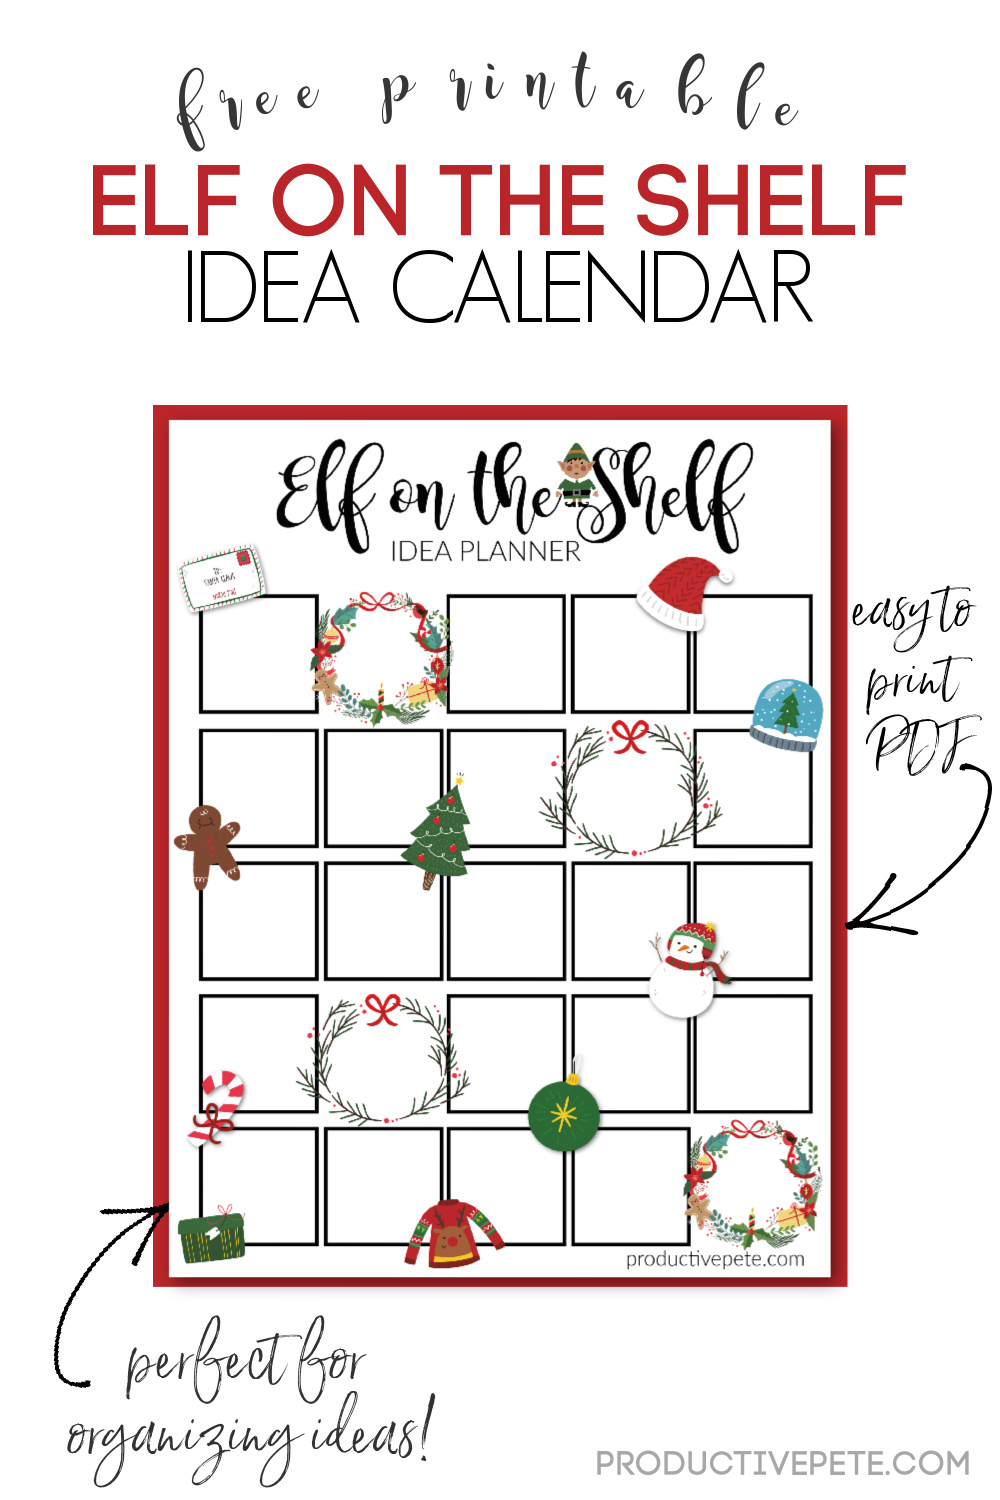 Free Printable Elf on the Shelf Calendar Productive Pete